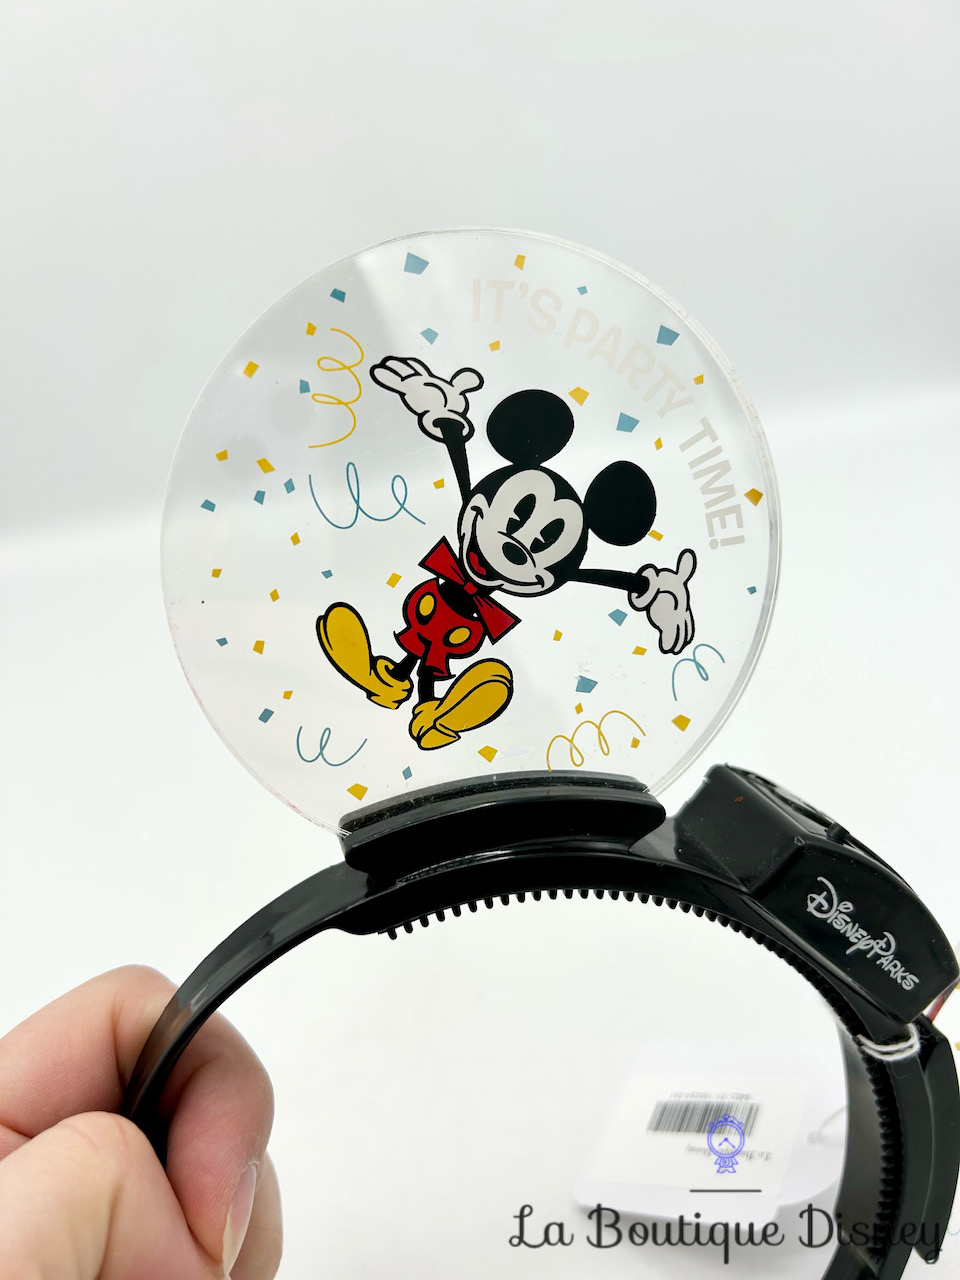 Serre tête Oreilles lumineuses Mickey Mouse Its Party Time Disneyland Paris 2018 Disney Ears lumière Worlds Biggest